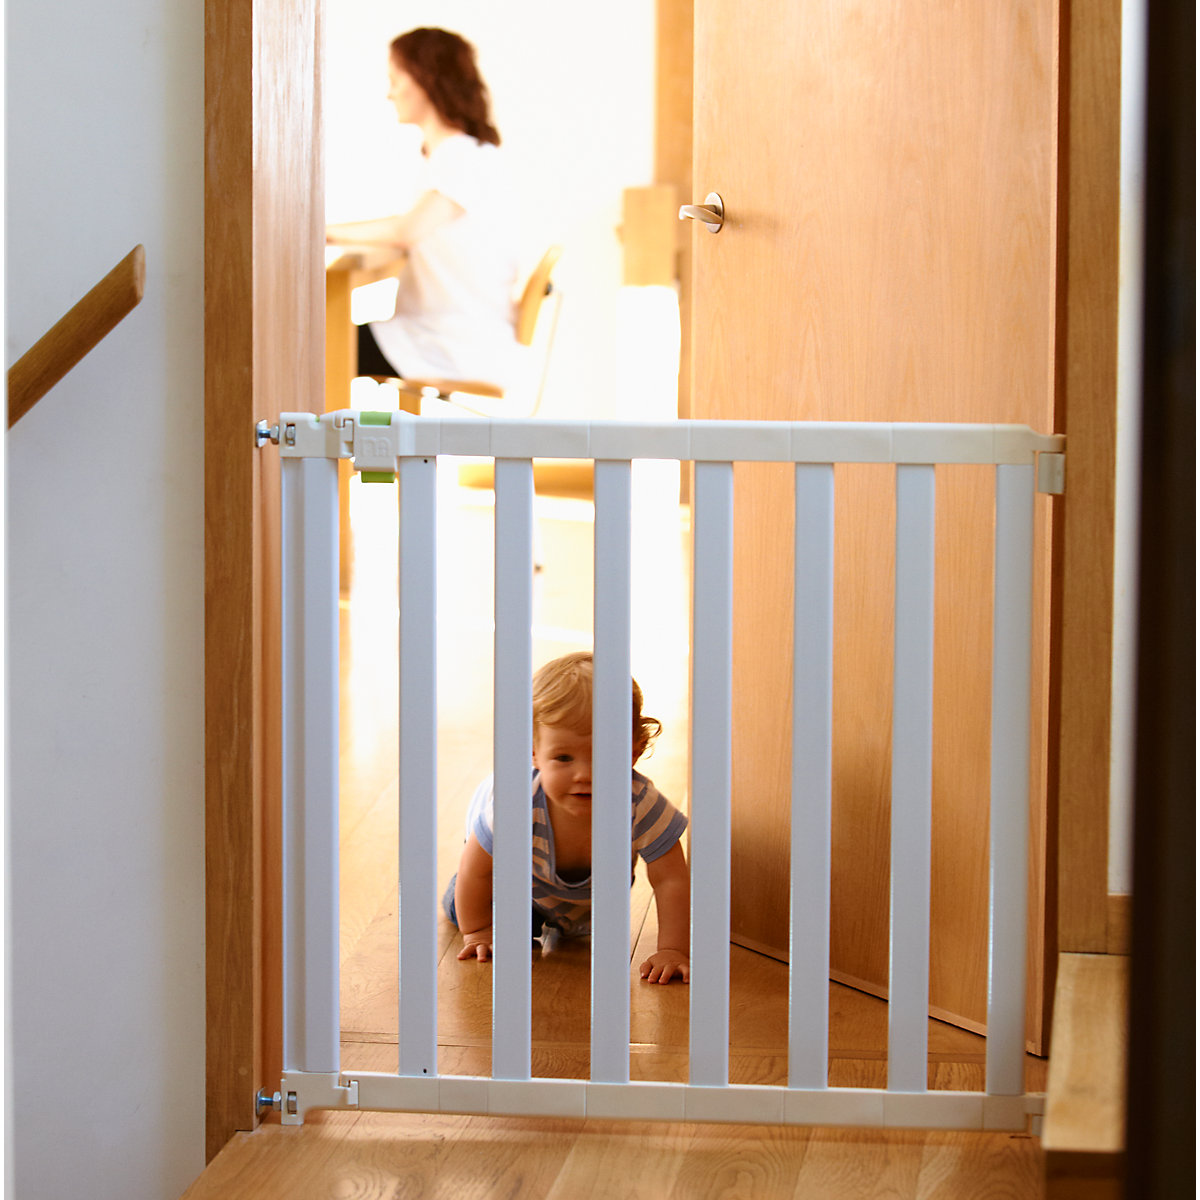 MOTHERCARE BABY/NURSERY/CHILD BLOKIT Safety Stair Door Gate - £20.00